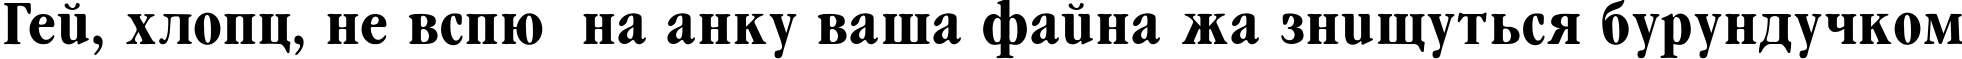 Пример написания шрифтом Garamond_Condenced-Bold текста на украинском